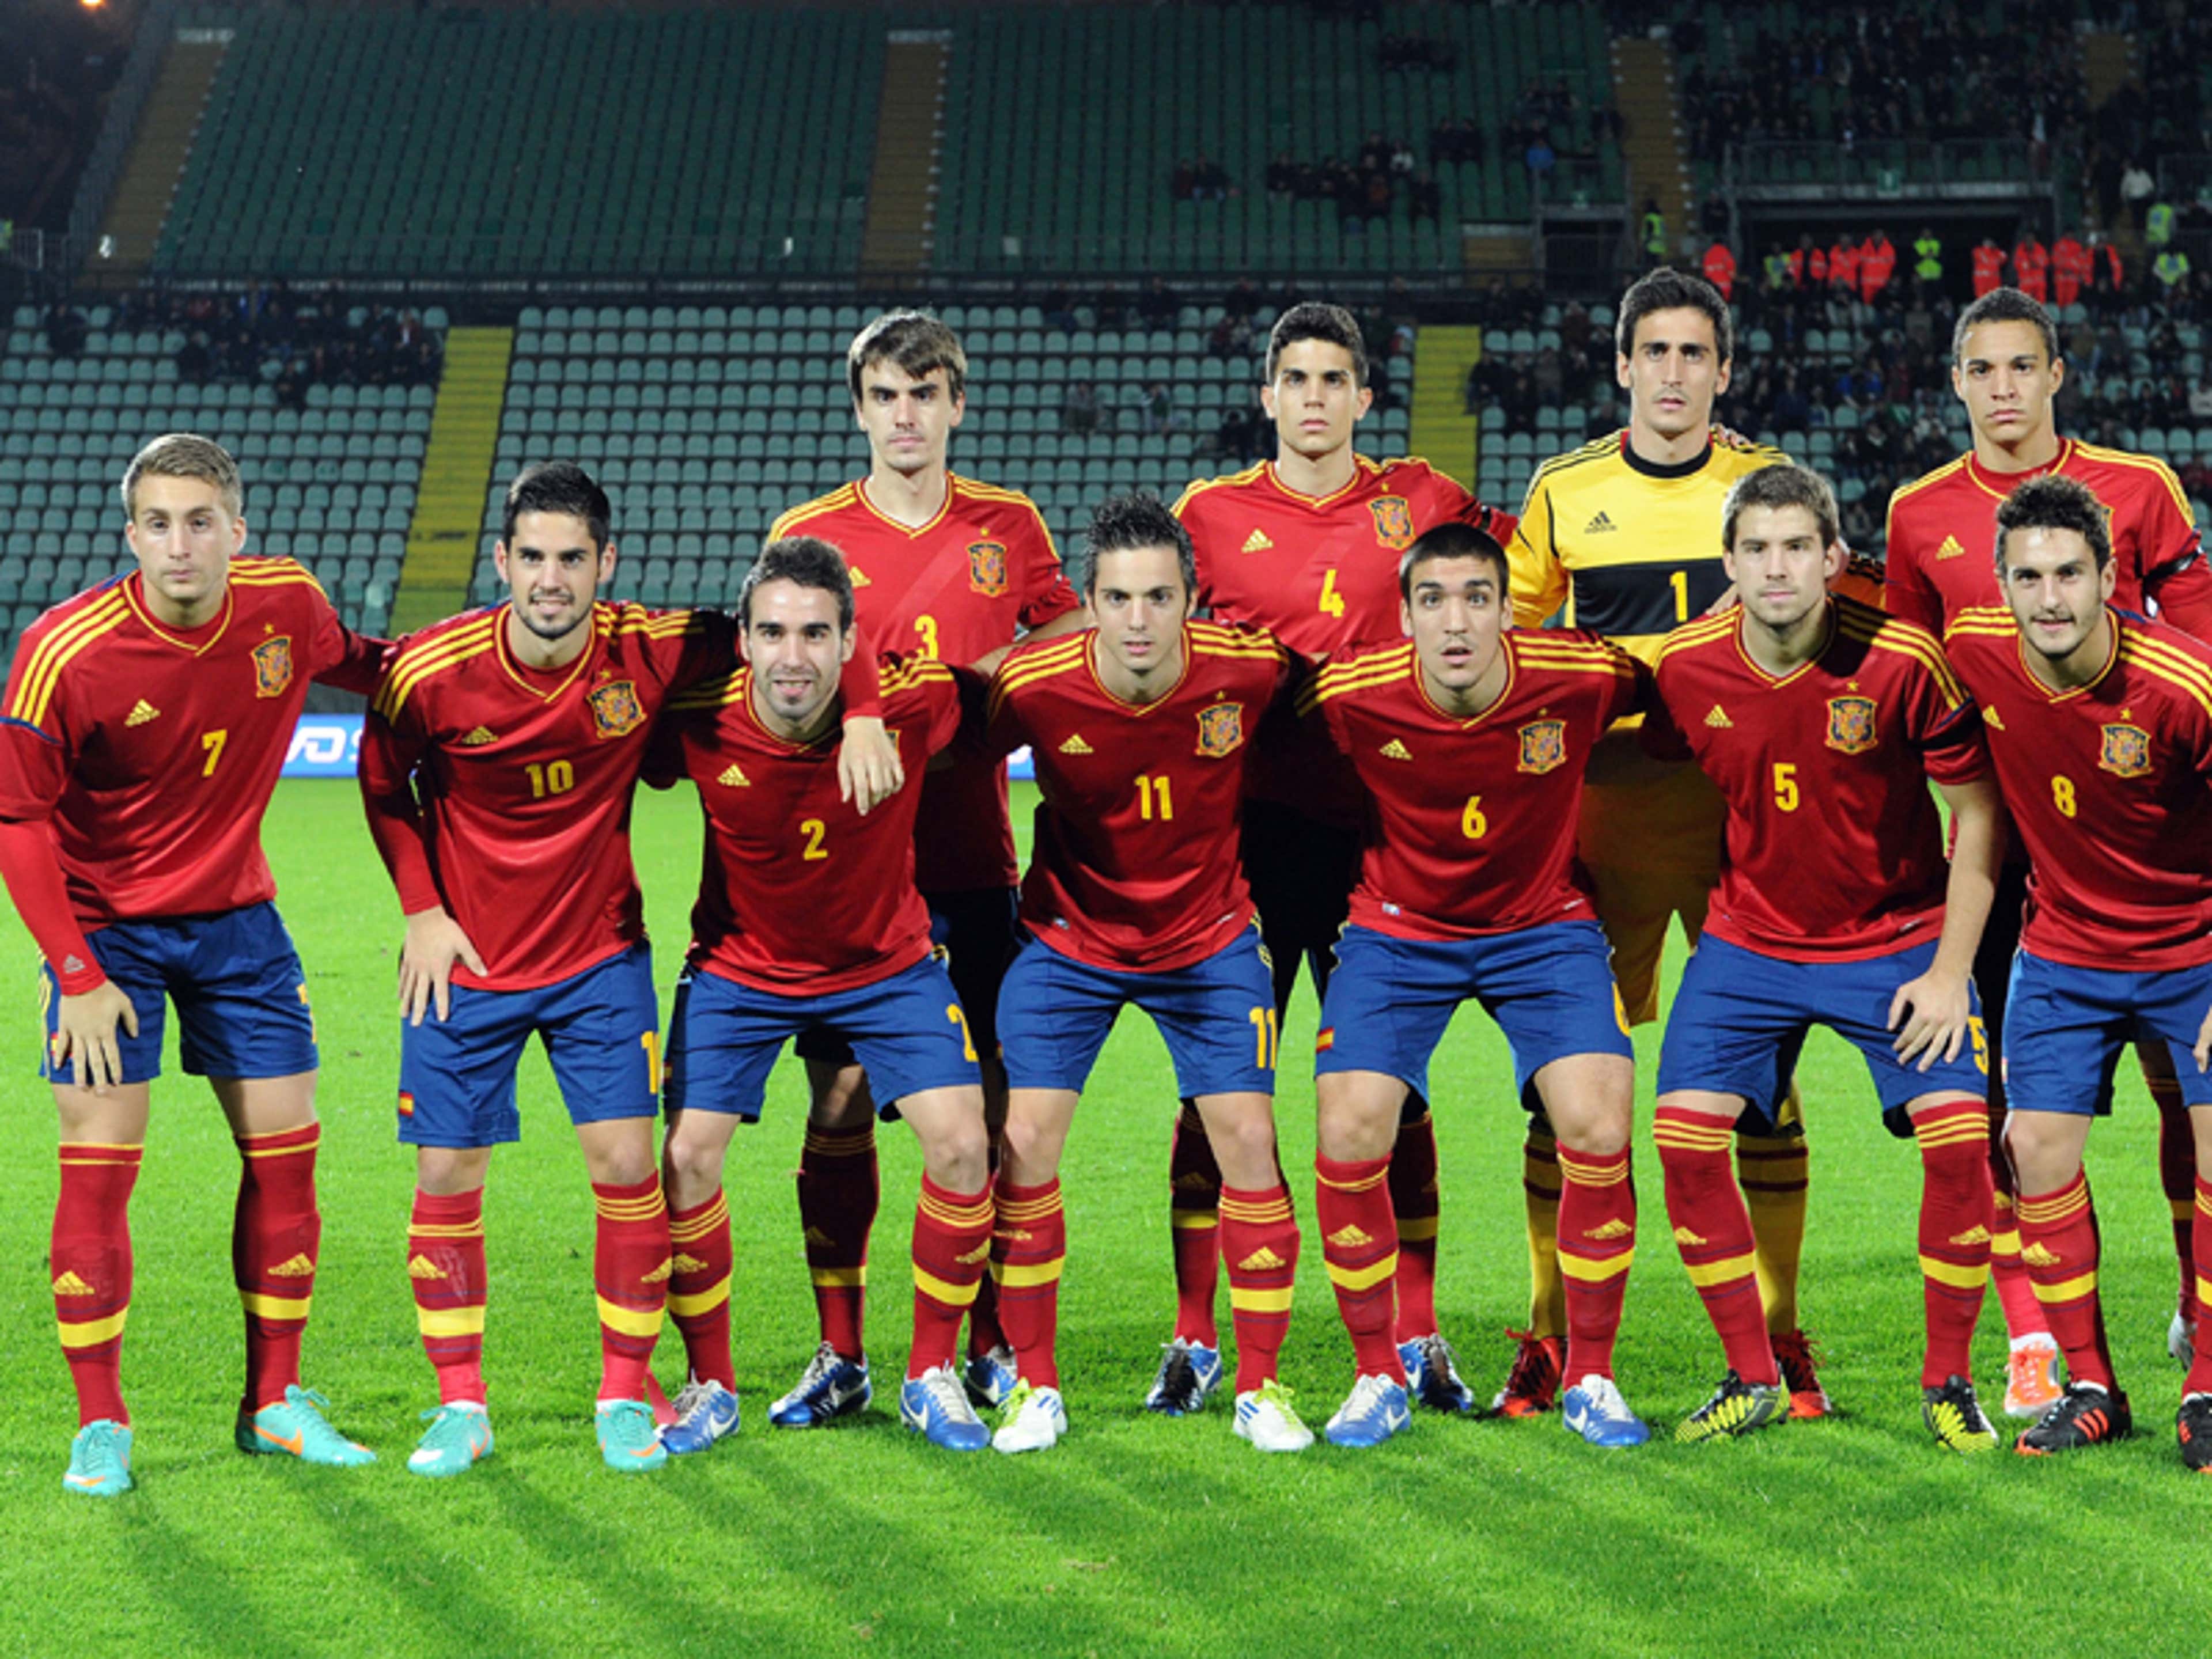 Under 21 International Friendly - Italy U21 v Spain U21, Spain team